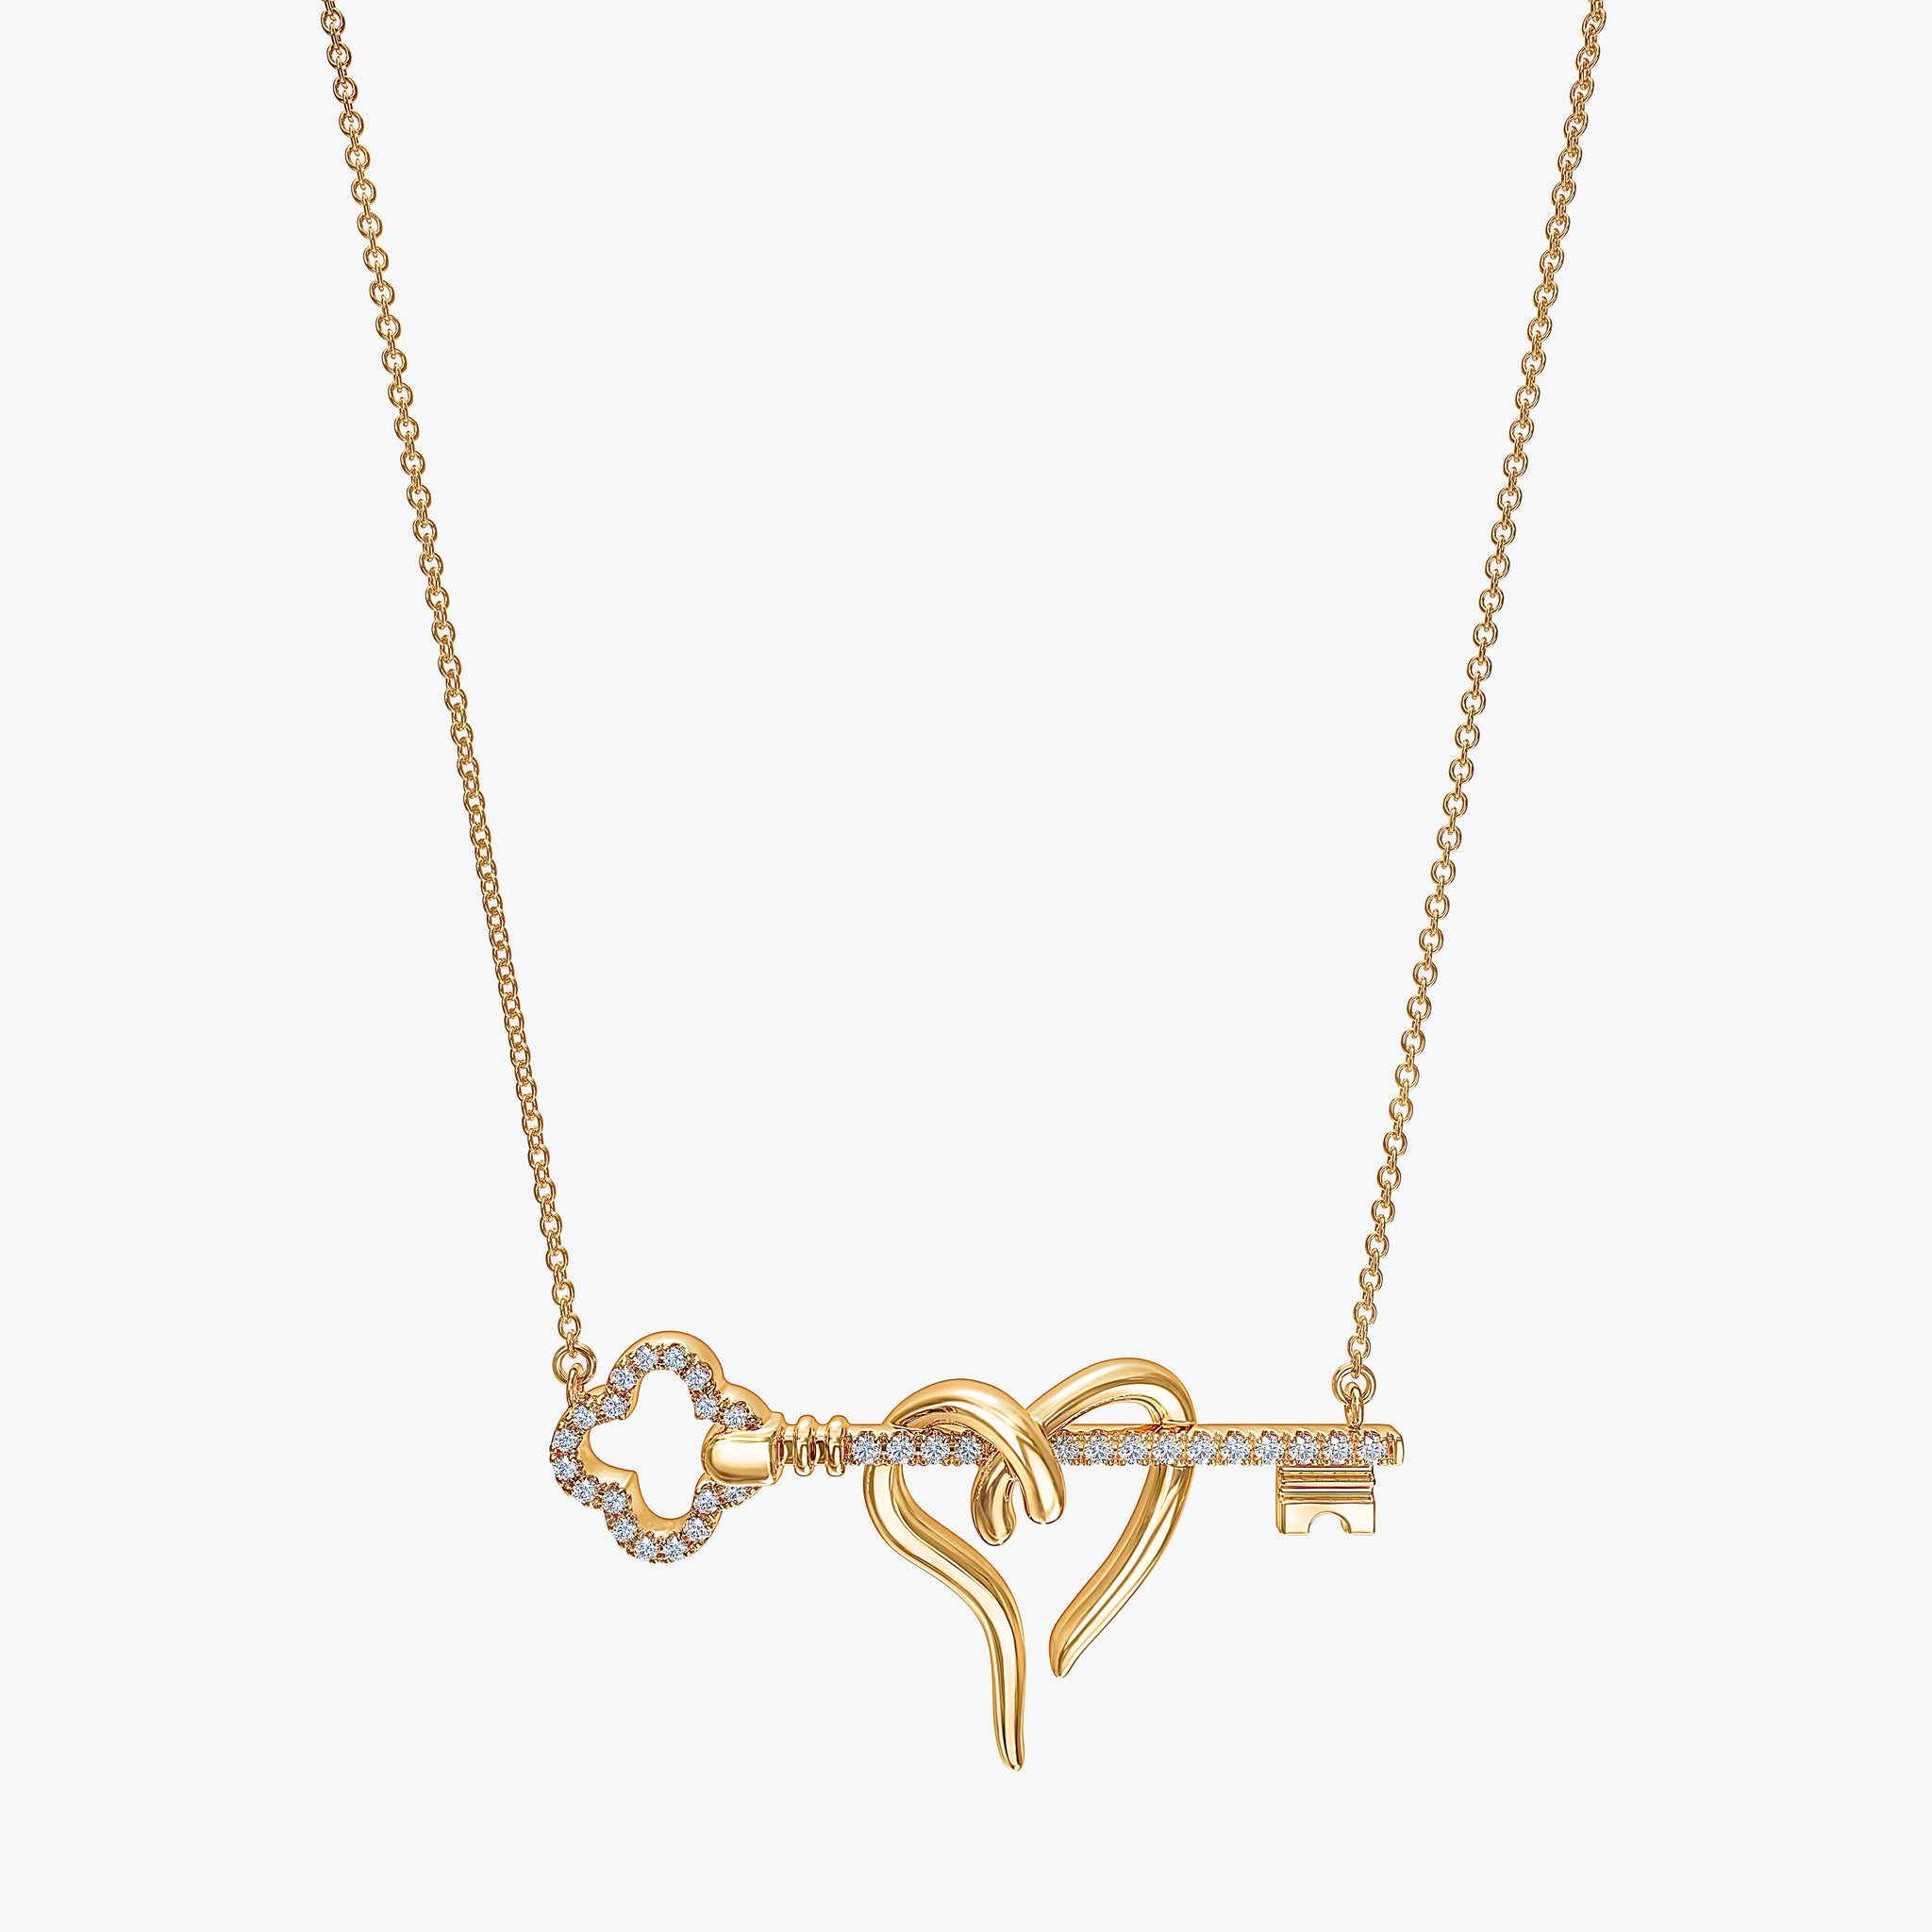 J'EVAR 14KT Yellow Gold Clover Heart & Key ALTR Lab Grown Diamond Necklace Lock View